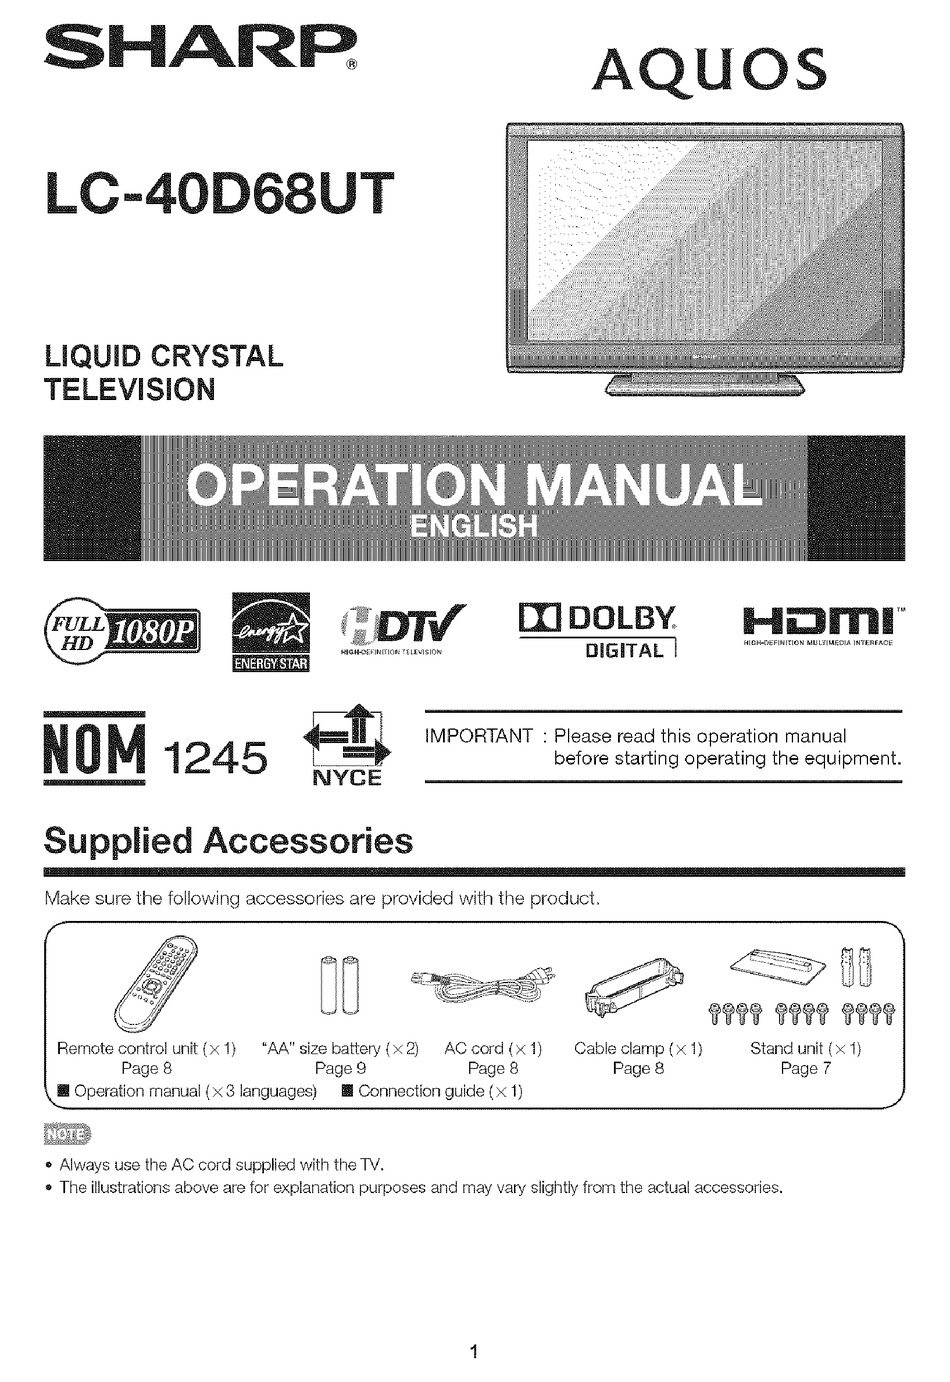 SHARP AQUOS LC-40D68UT OPERATION MANUAL Pdf Download | ManualsLib